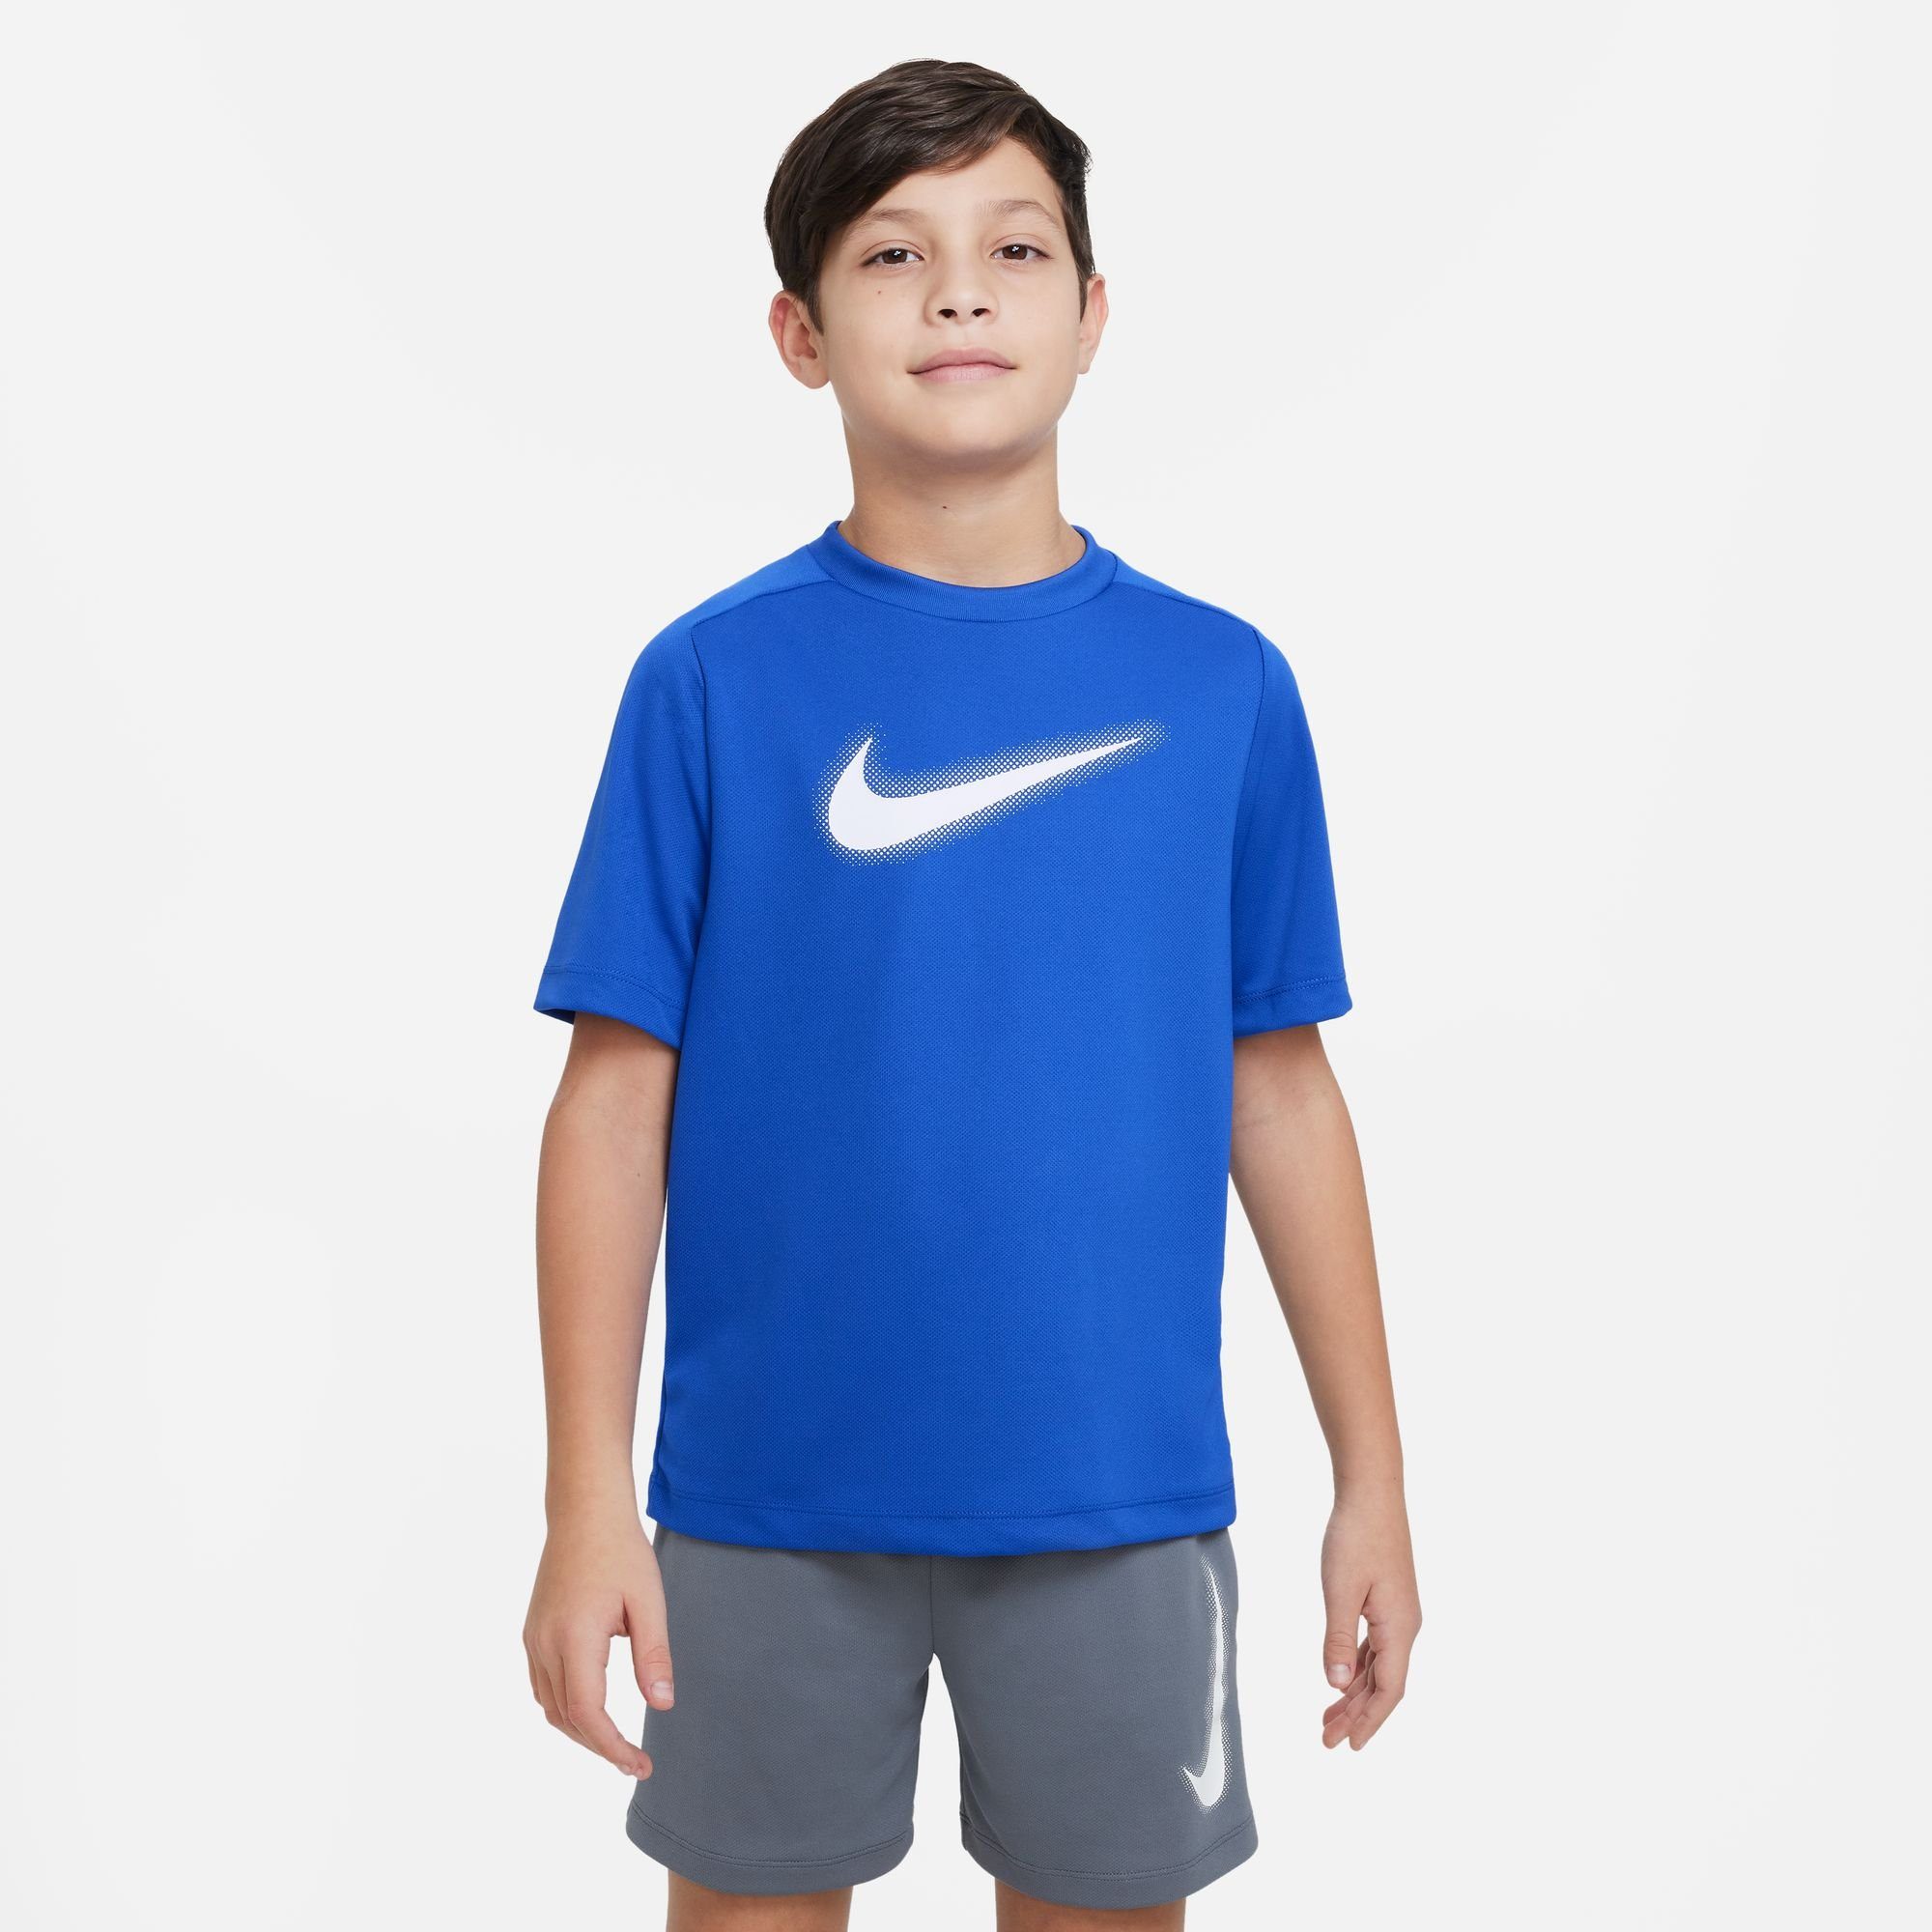 TRAINING KIDS' MULTI+ ROYAL/WHITE Nike DRI-FIT GRAPHIC Trainingsshirt BIG TOP (BOYS) GAME